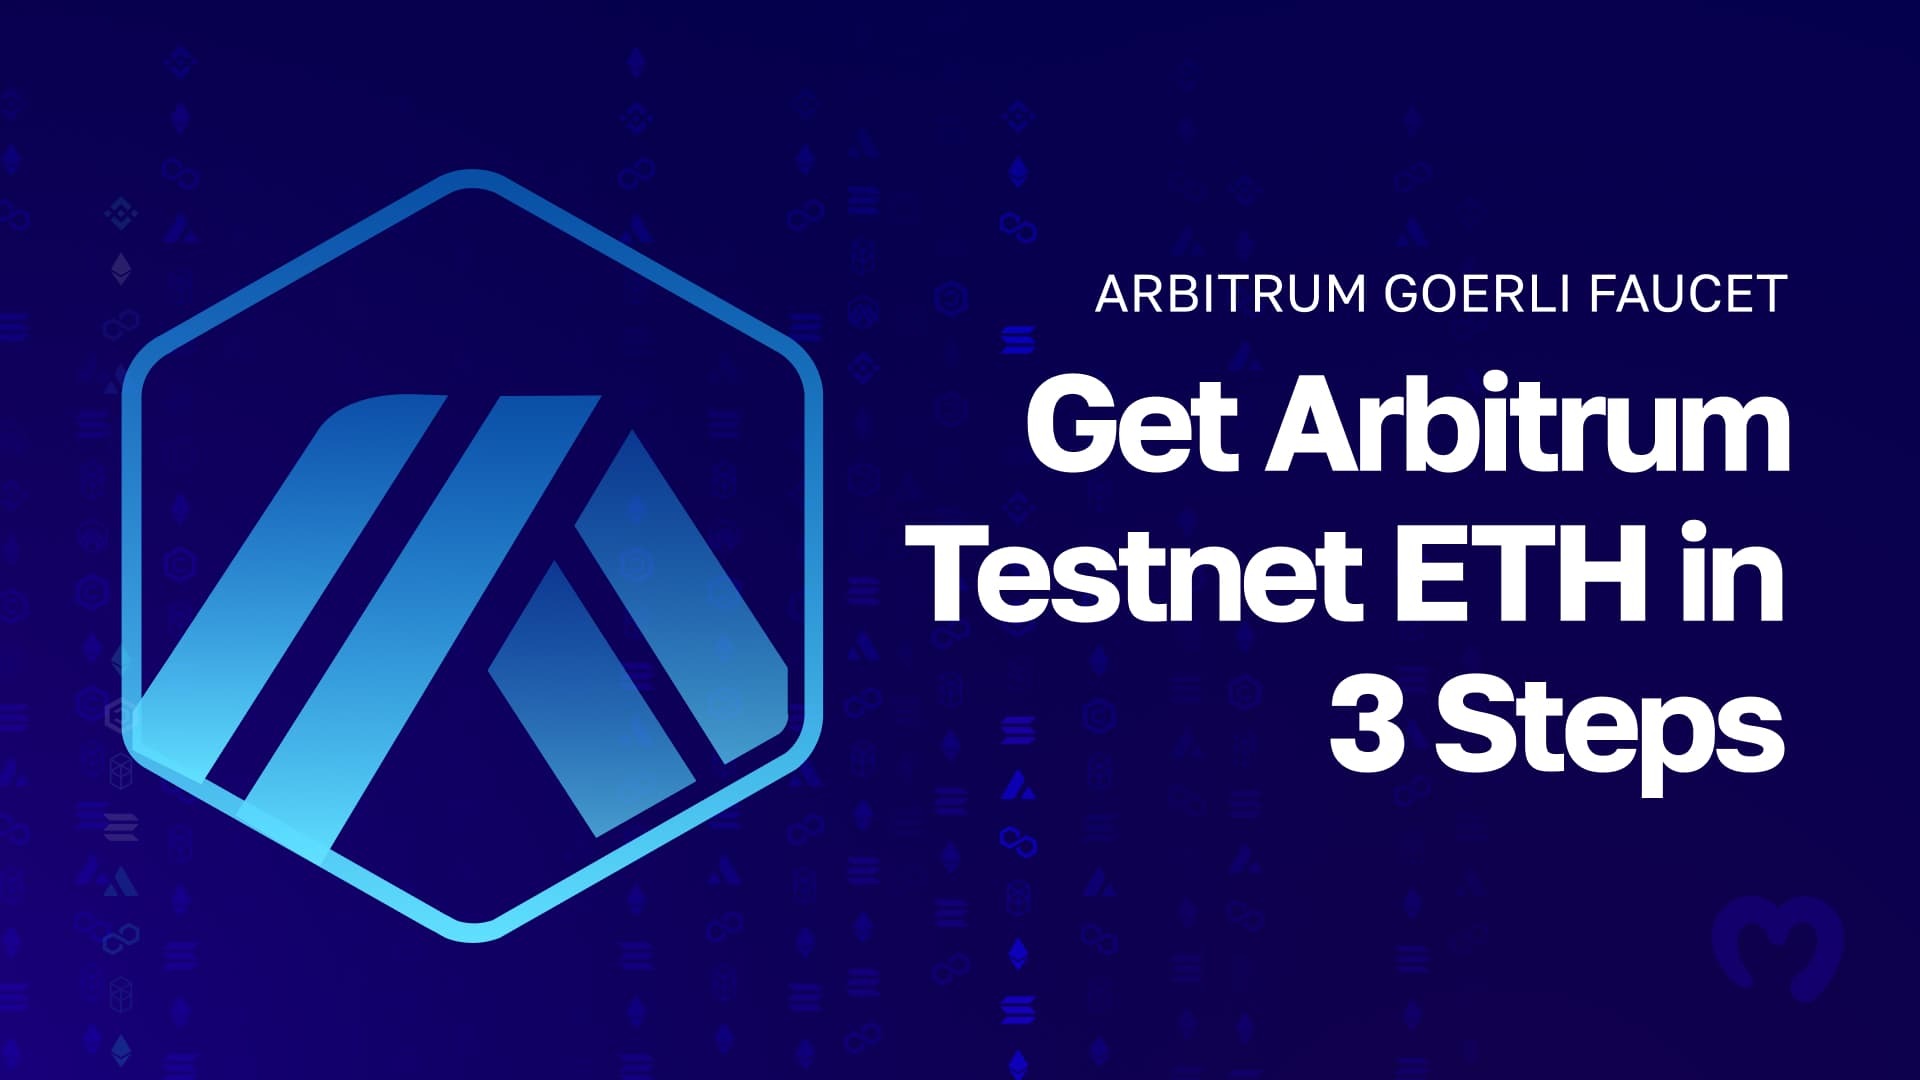 Arbitrum Goerli Faucet - Get Arbitrum Testnet ETH in 3 Steps